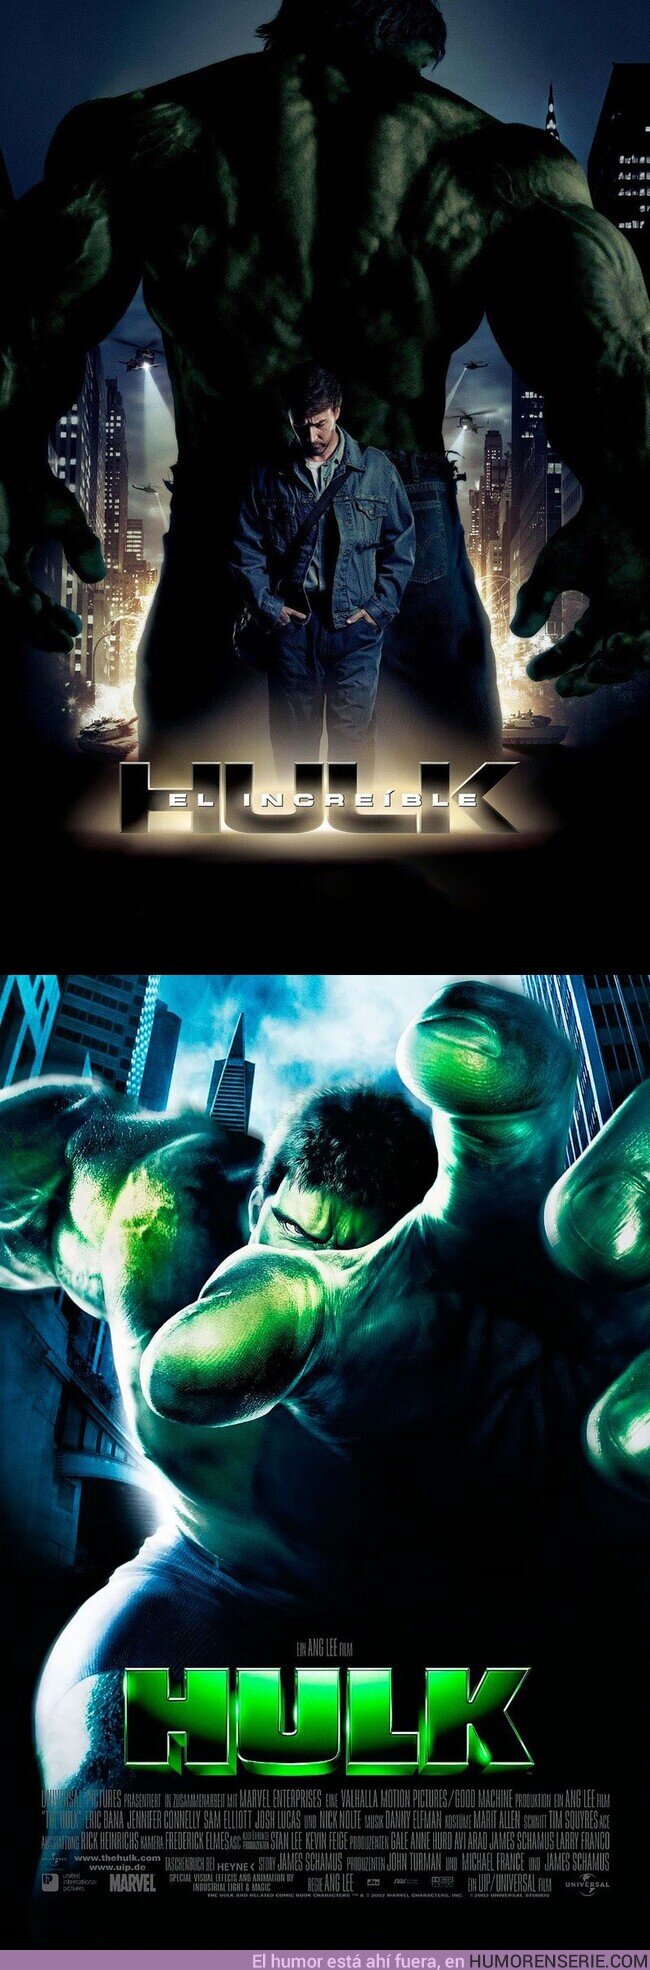 117592 - ¿Qué Hulk os gustó más?  , por @Roybattyforever